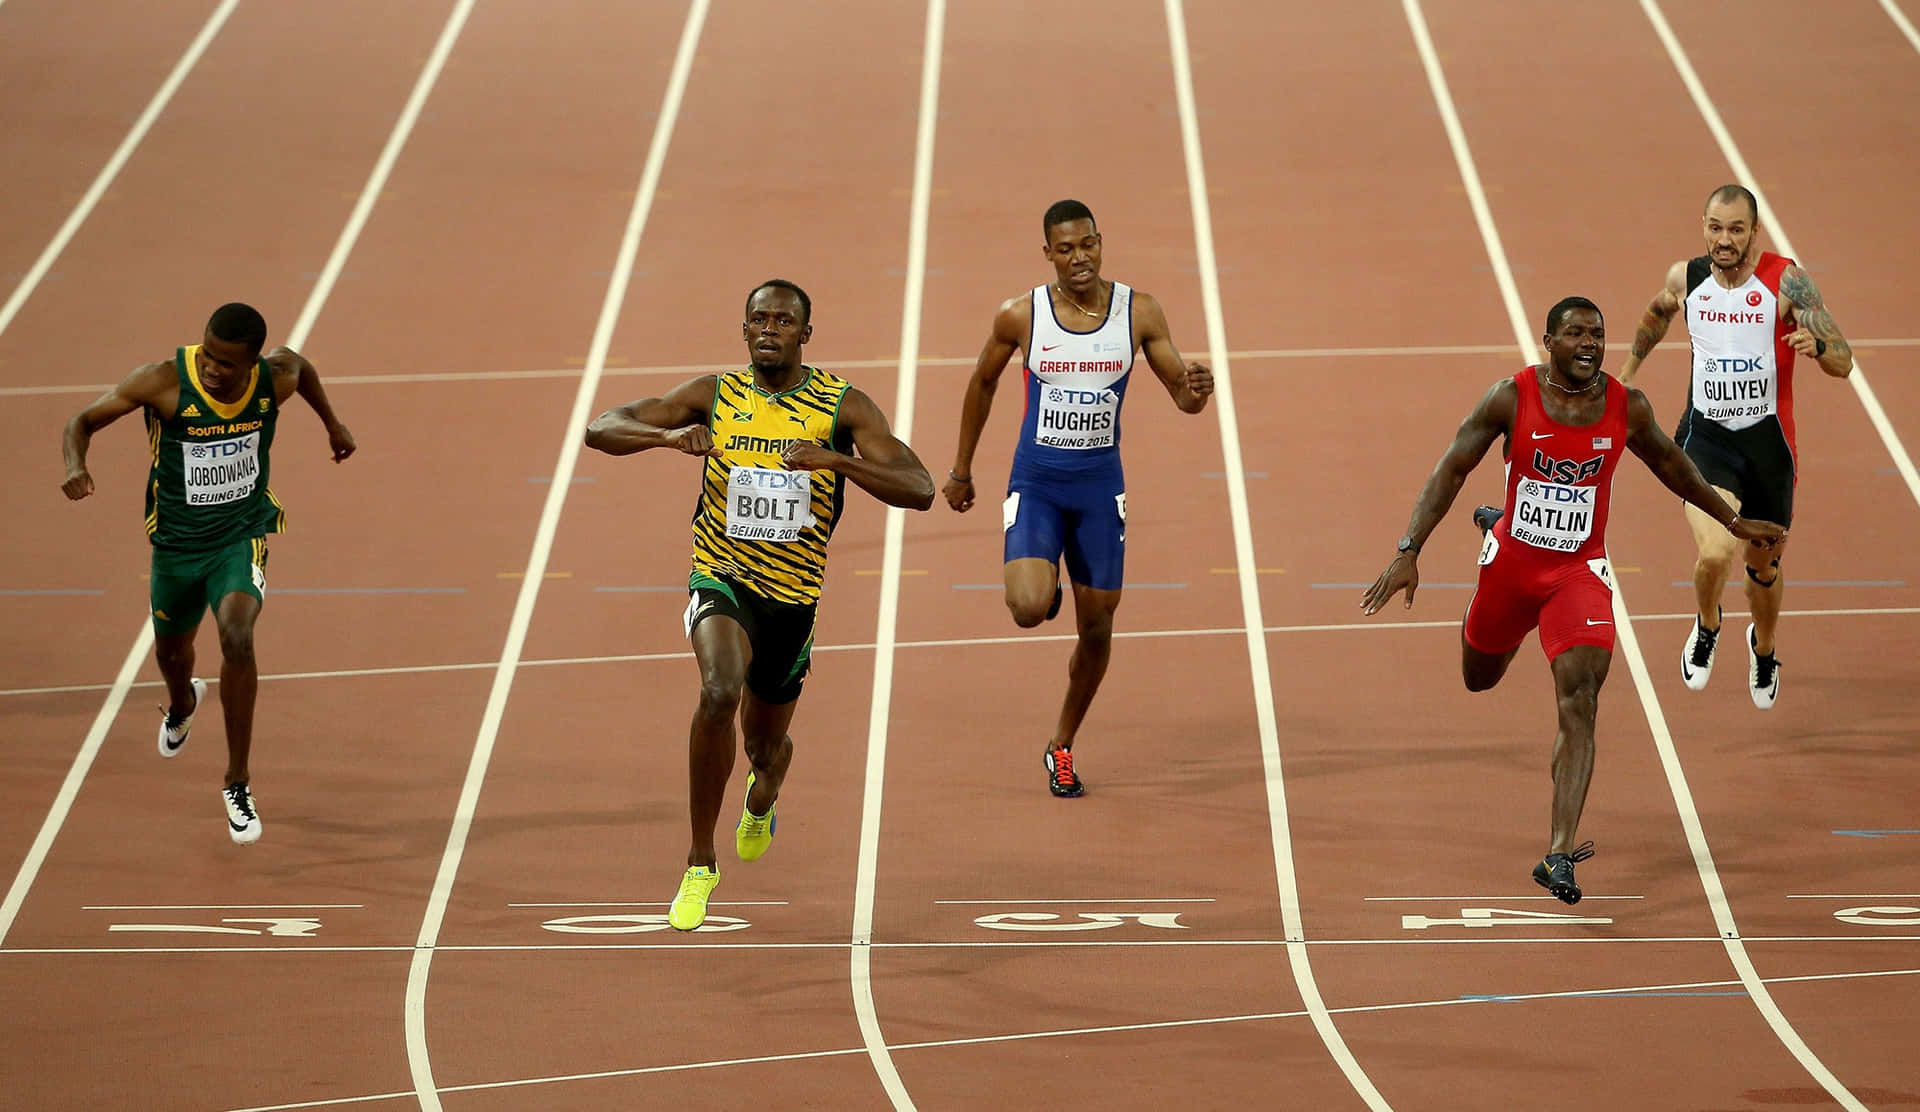 Jamaikanischerathlet Usain Bolt Im Rennen. Wallpaper